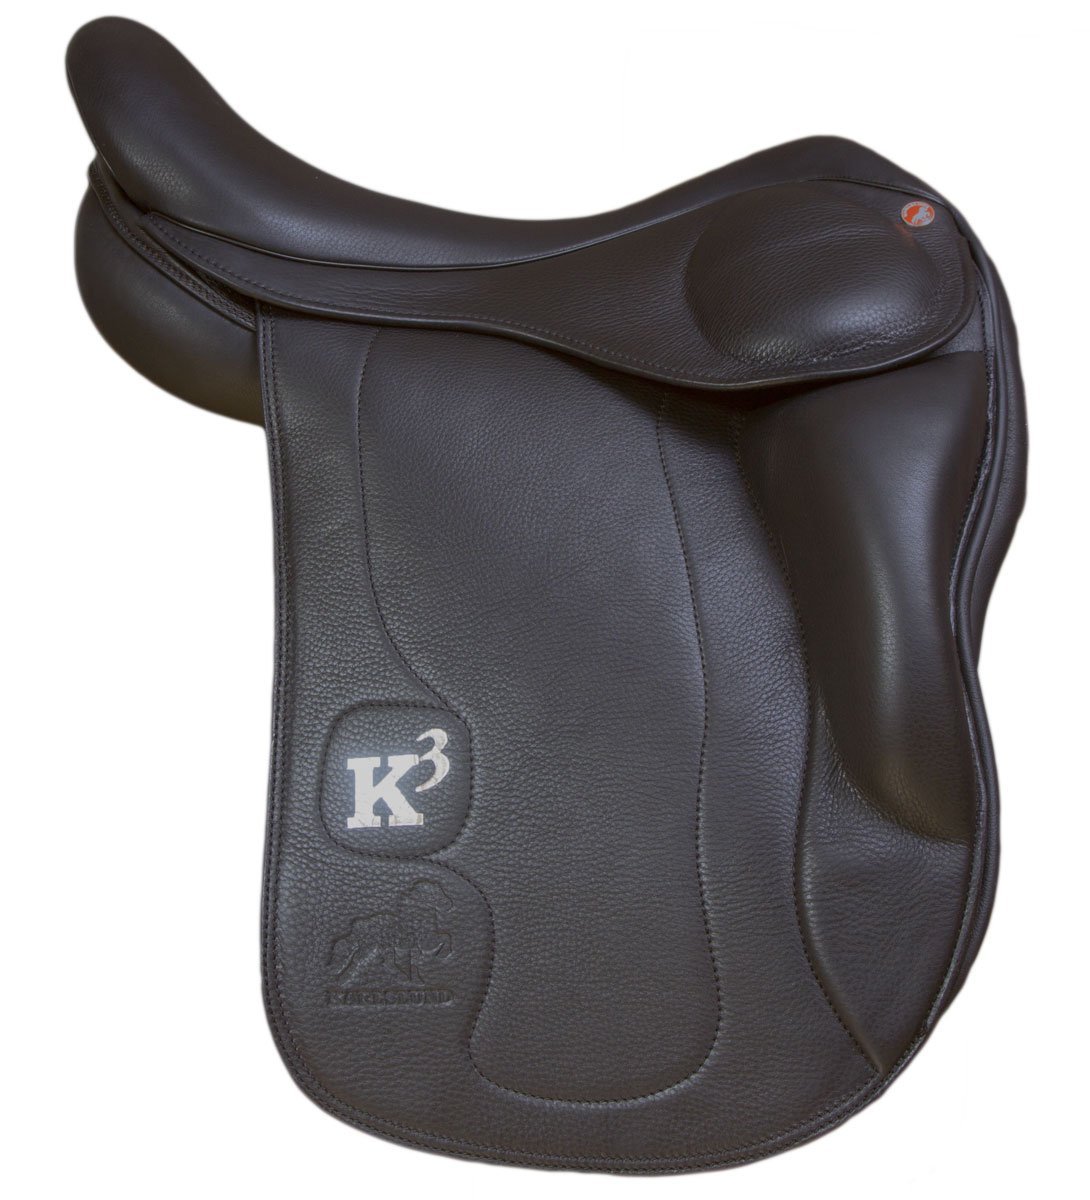 Karlslund Riding Equipment K3 Saddle with Short Knee Blocks - Black, 16-Inch/44 cm